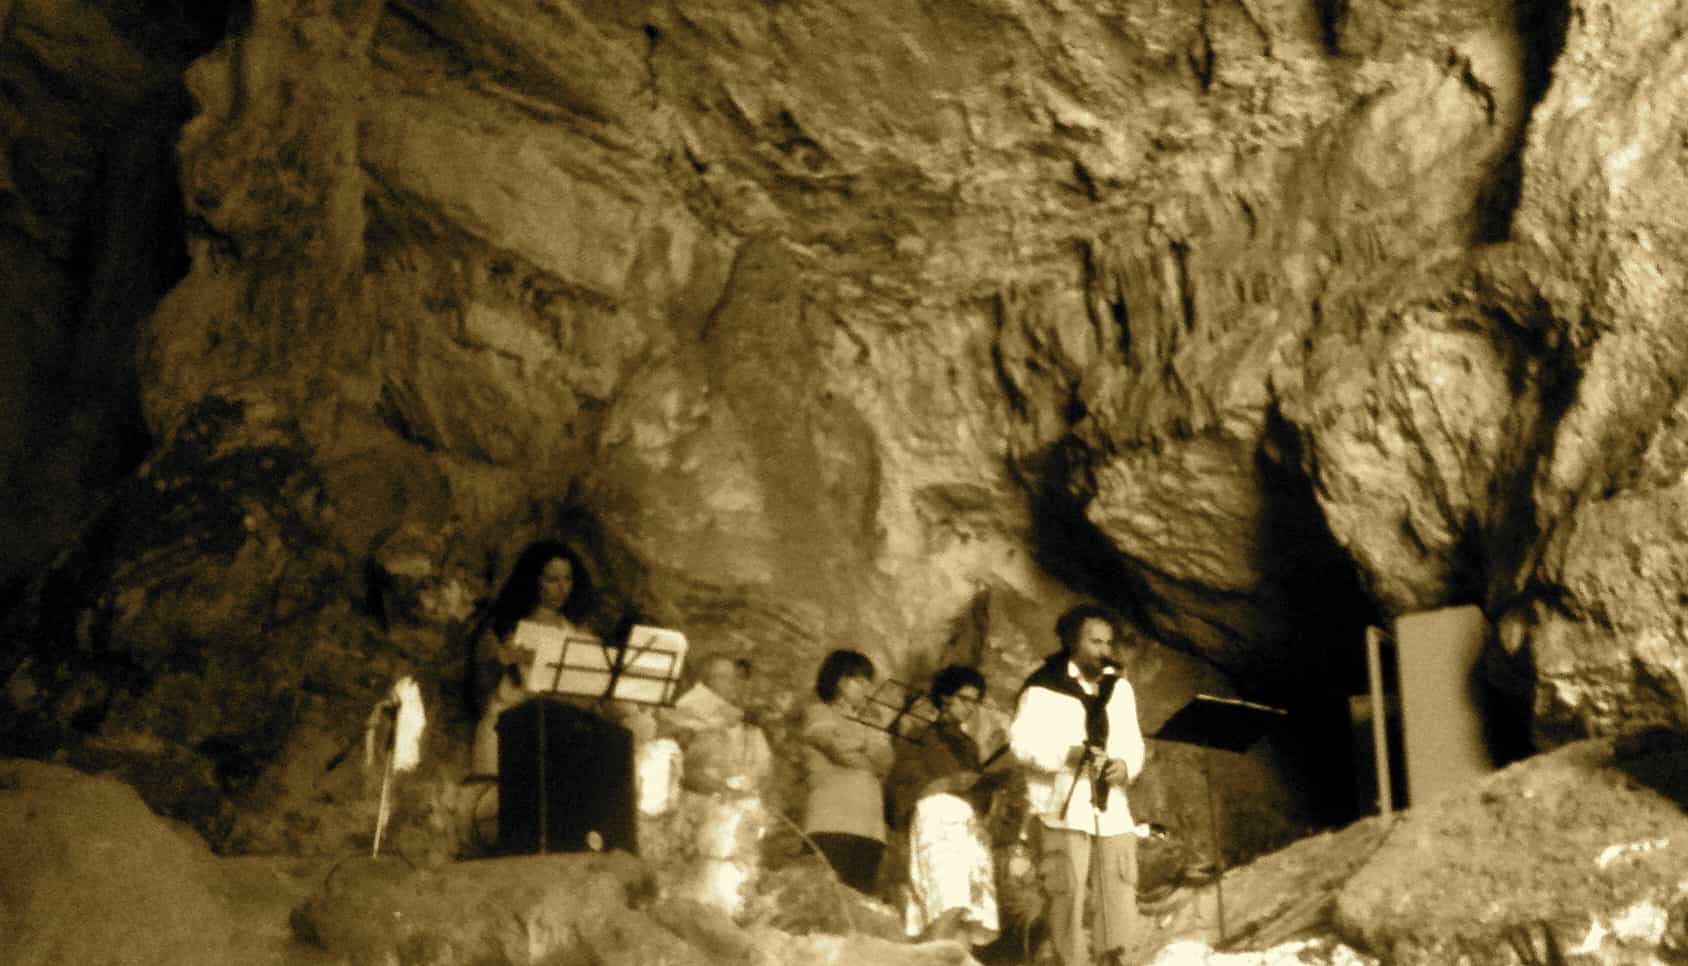 grotta del cavallone - stalattiti e stalagmiti